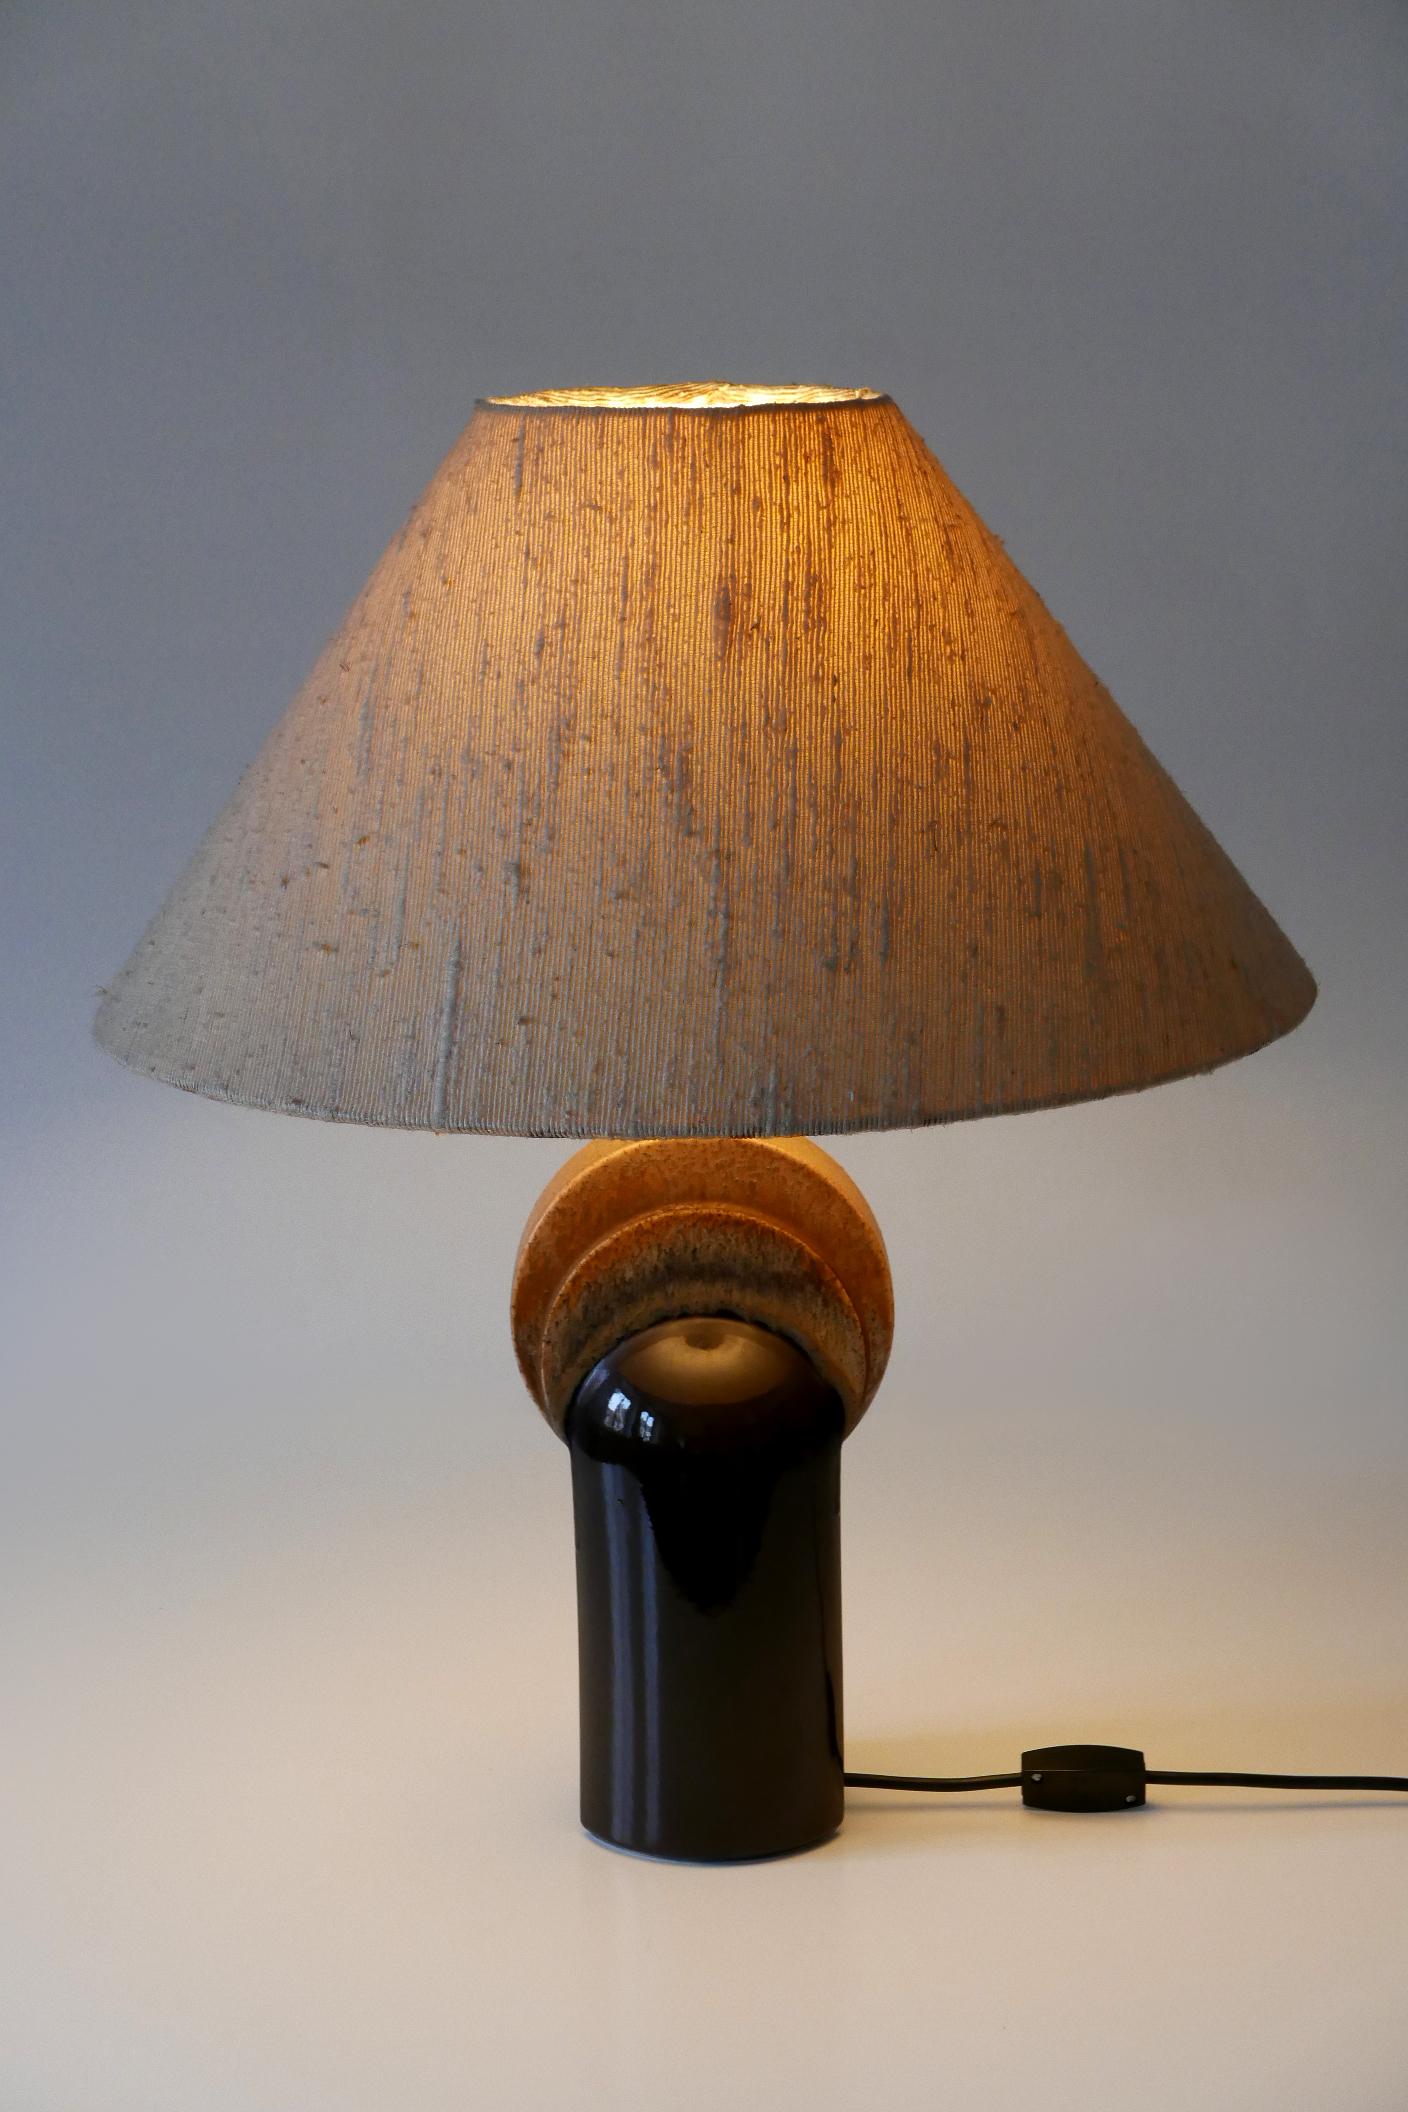 Elegant Mid-Century Modern Ceramic Table Lamp by Leola Design Germany 1960s For Sale 1